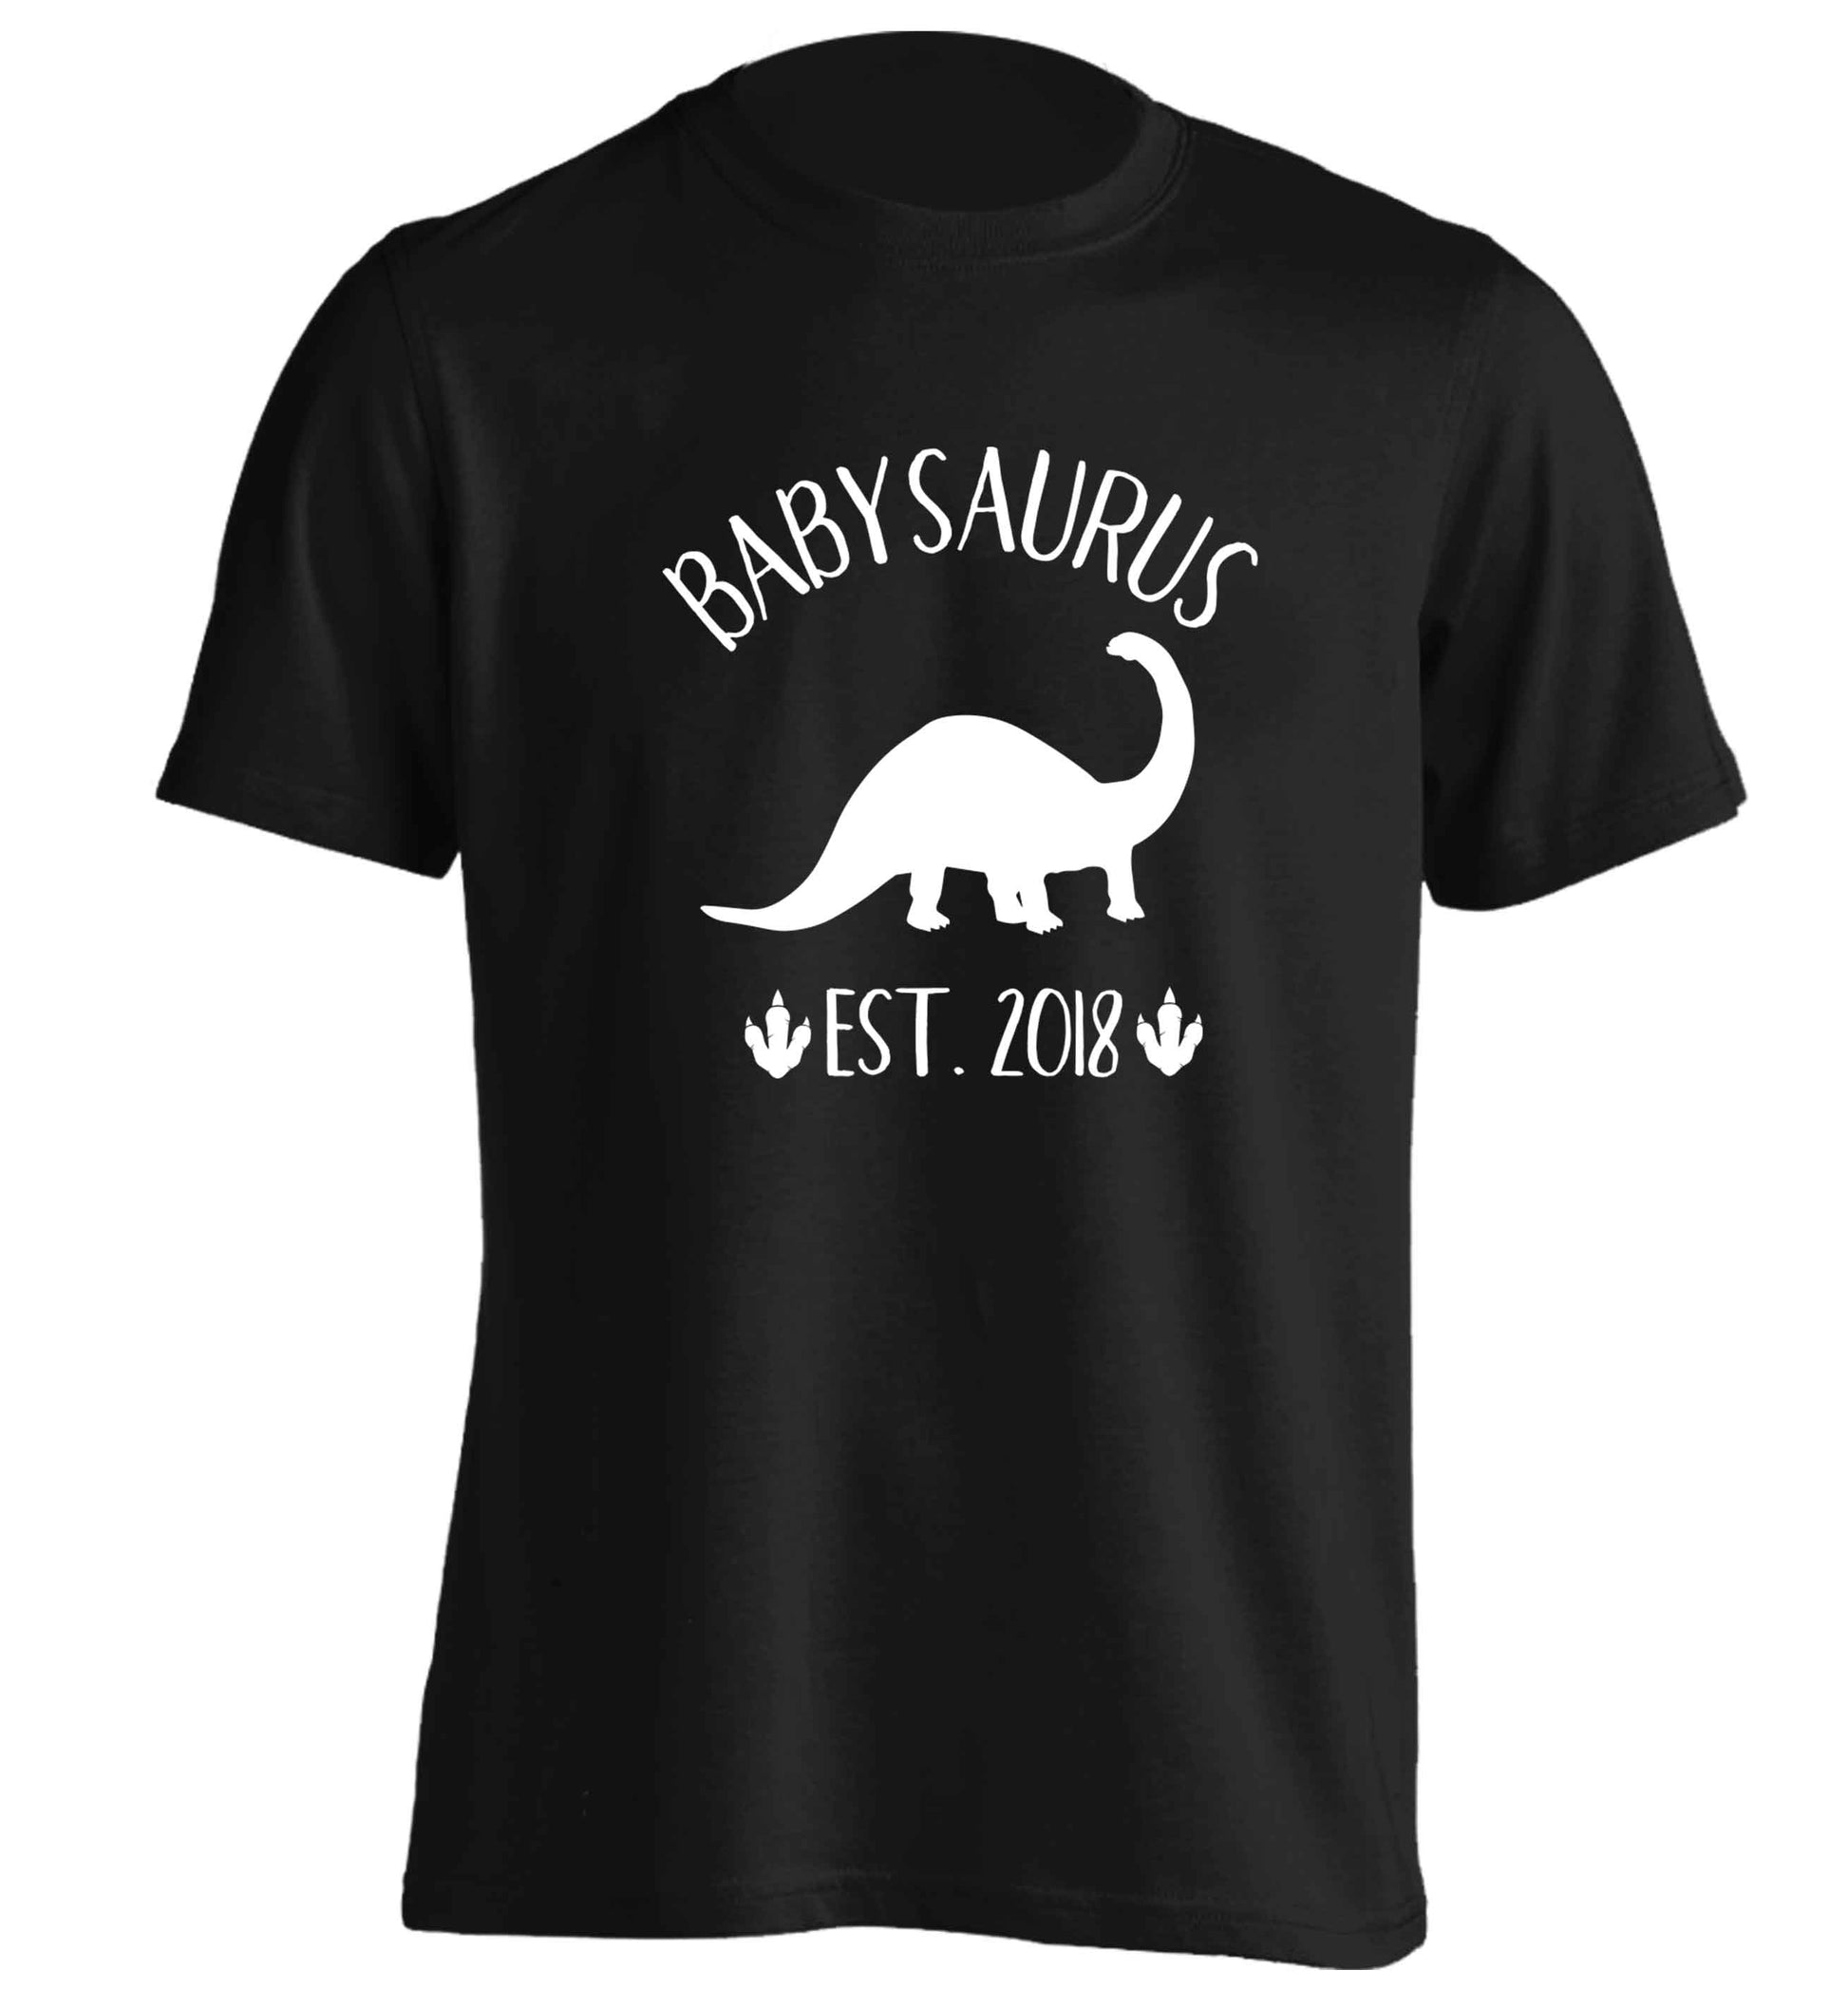 Personalised babysaurus since (custom date) adults unisex black Tshirt 2XL